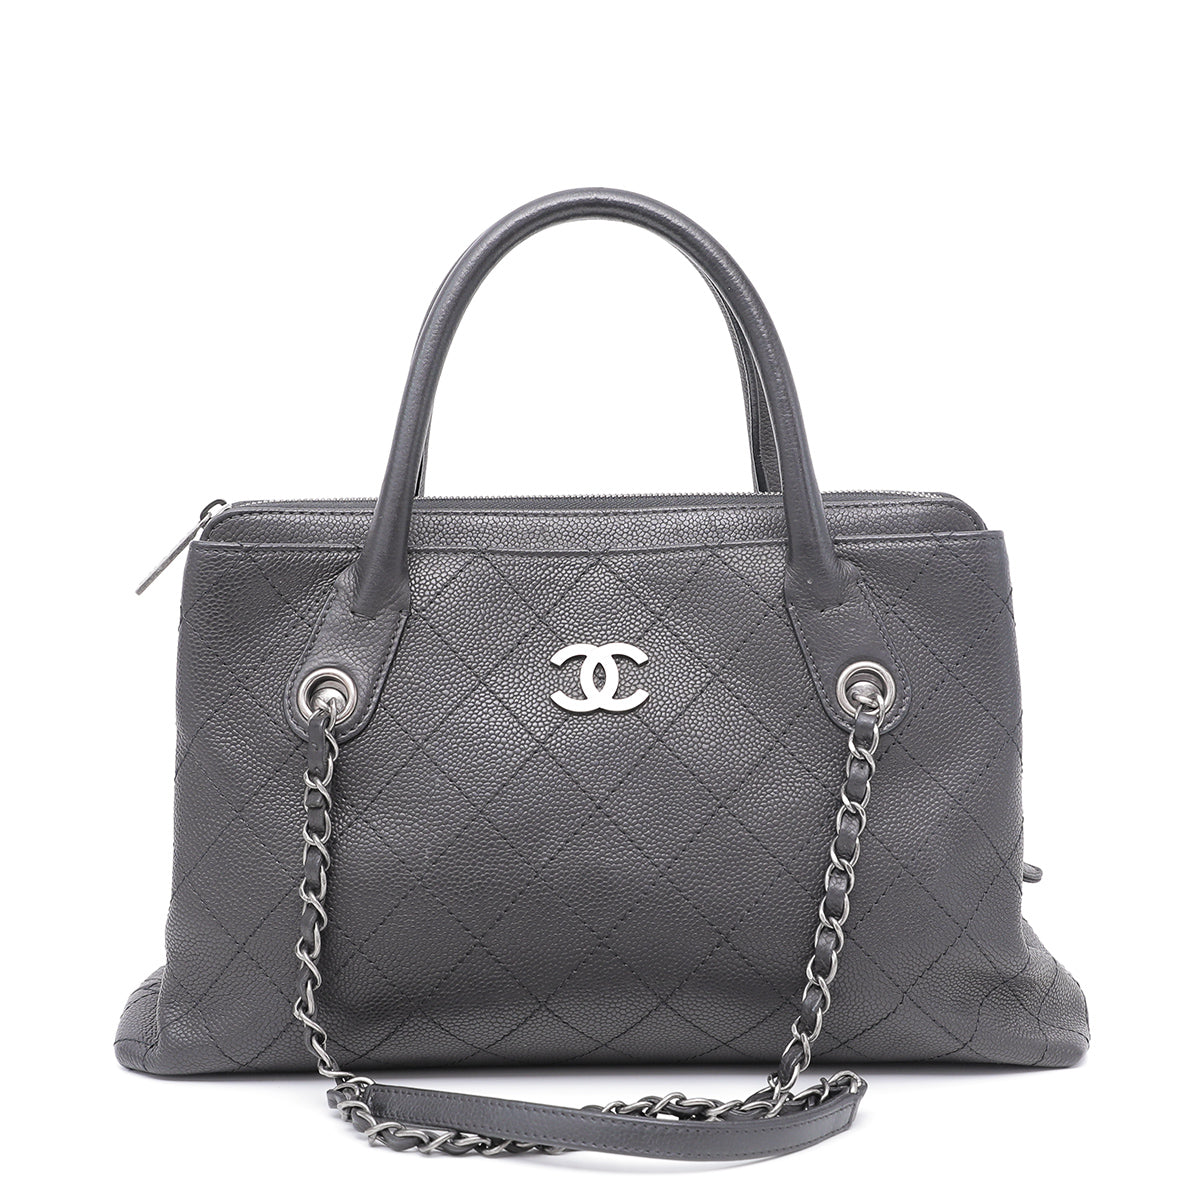 Chanel Black Urban Shopping Tote Small Bag